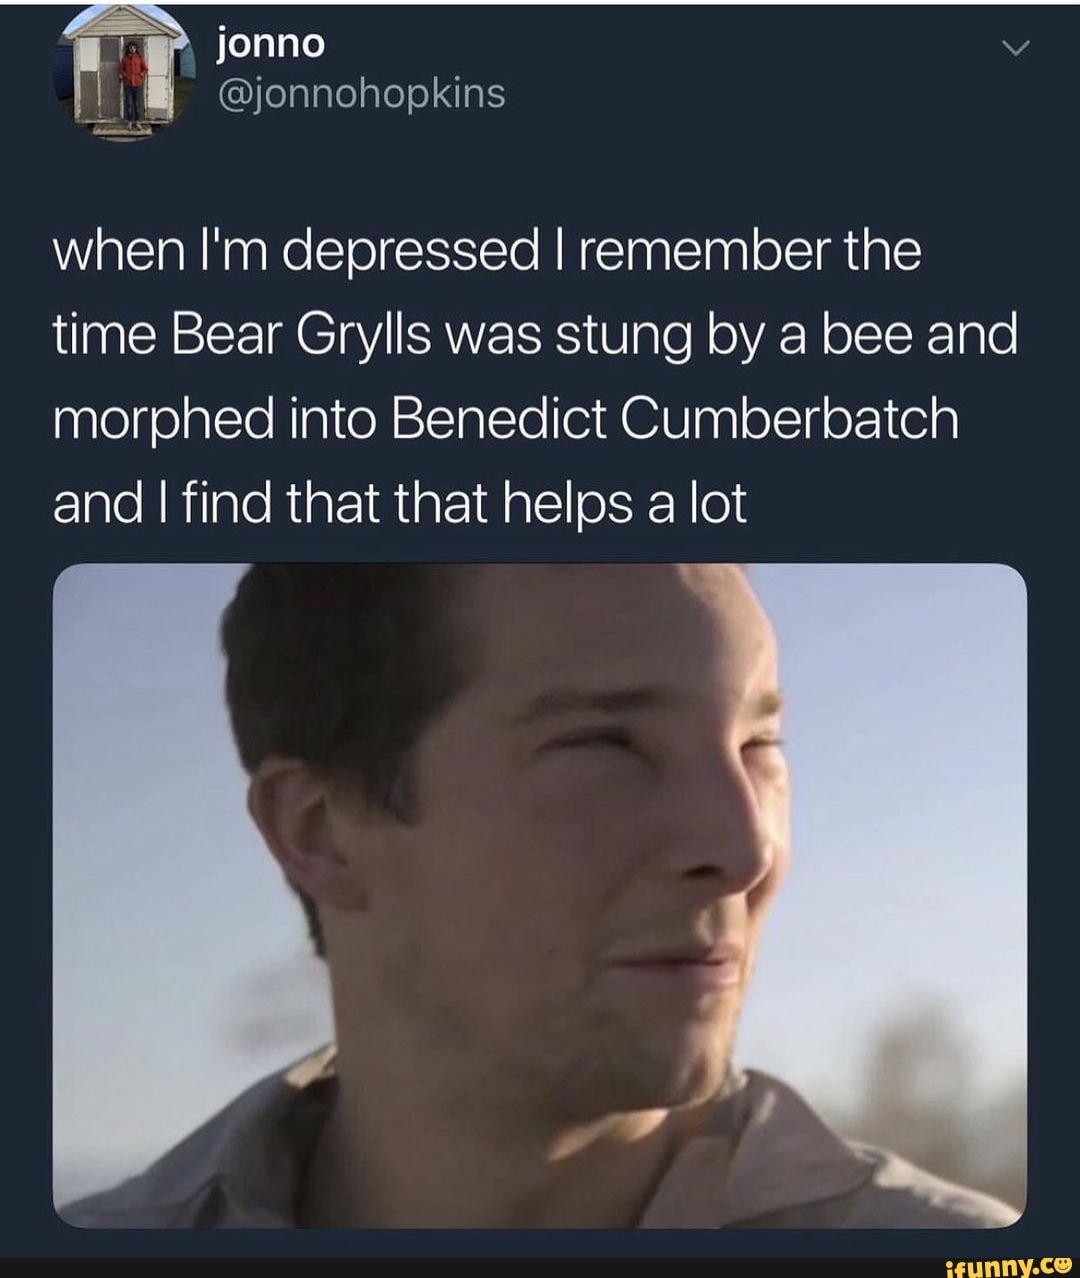 Bear grylls bee sting meme